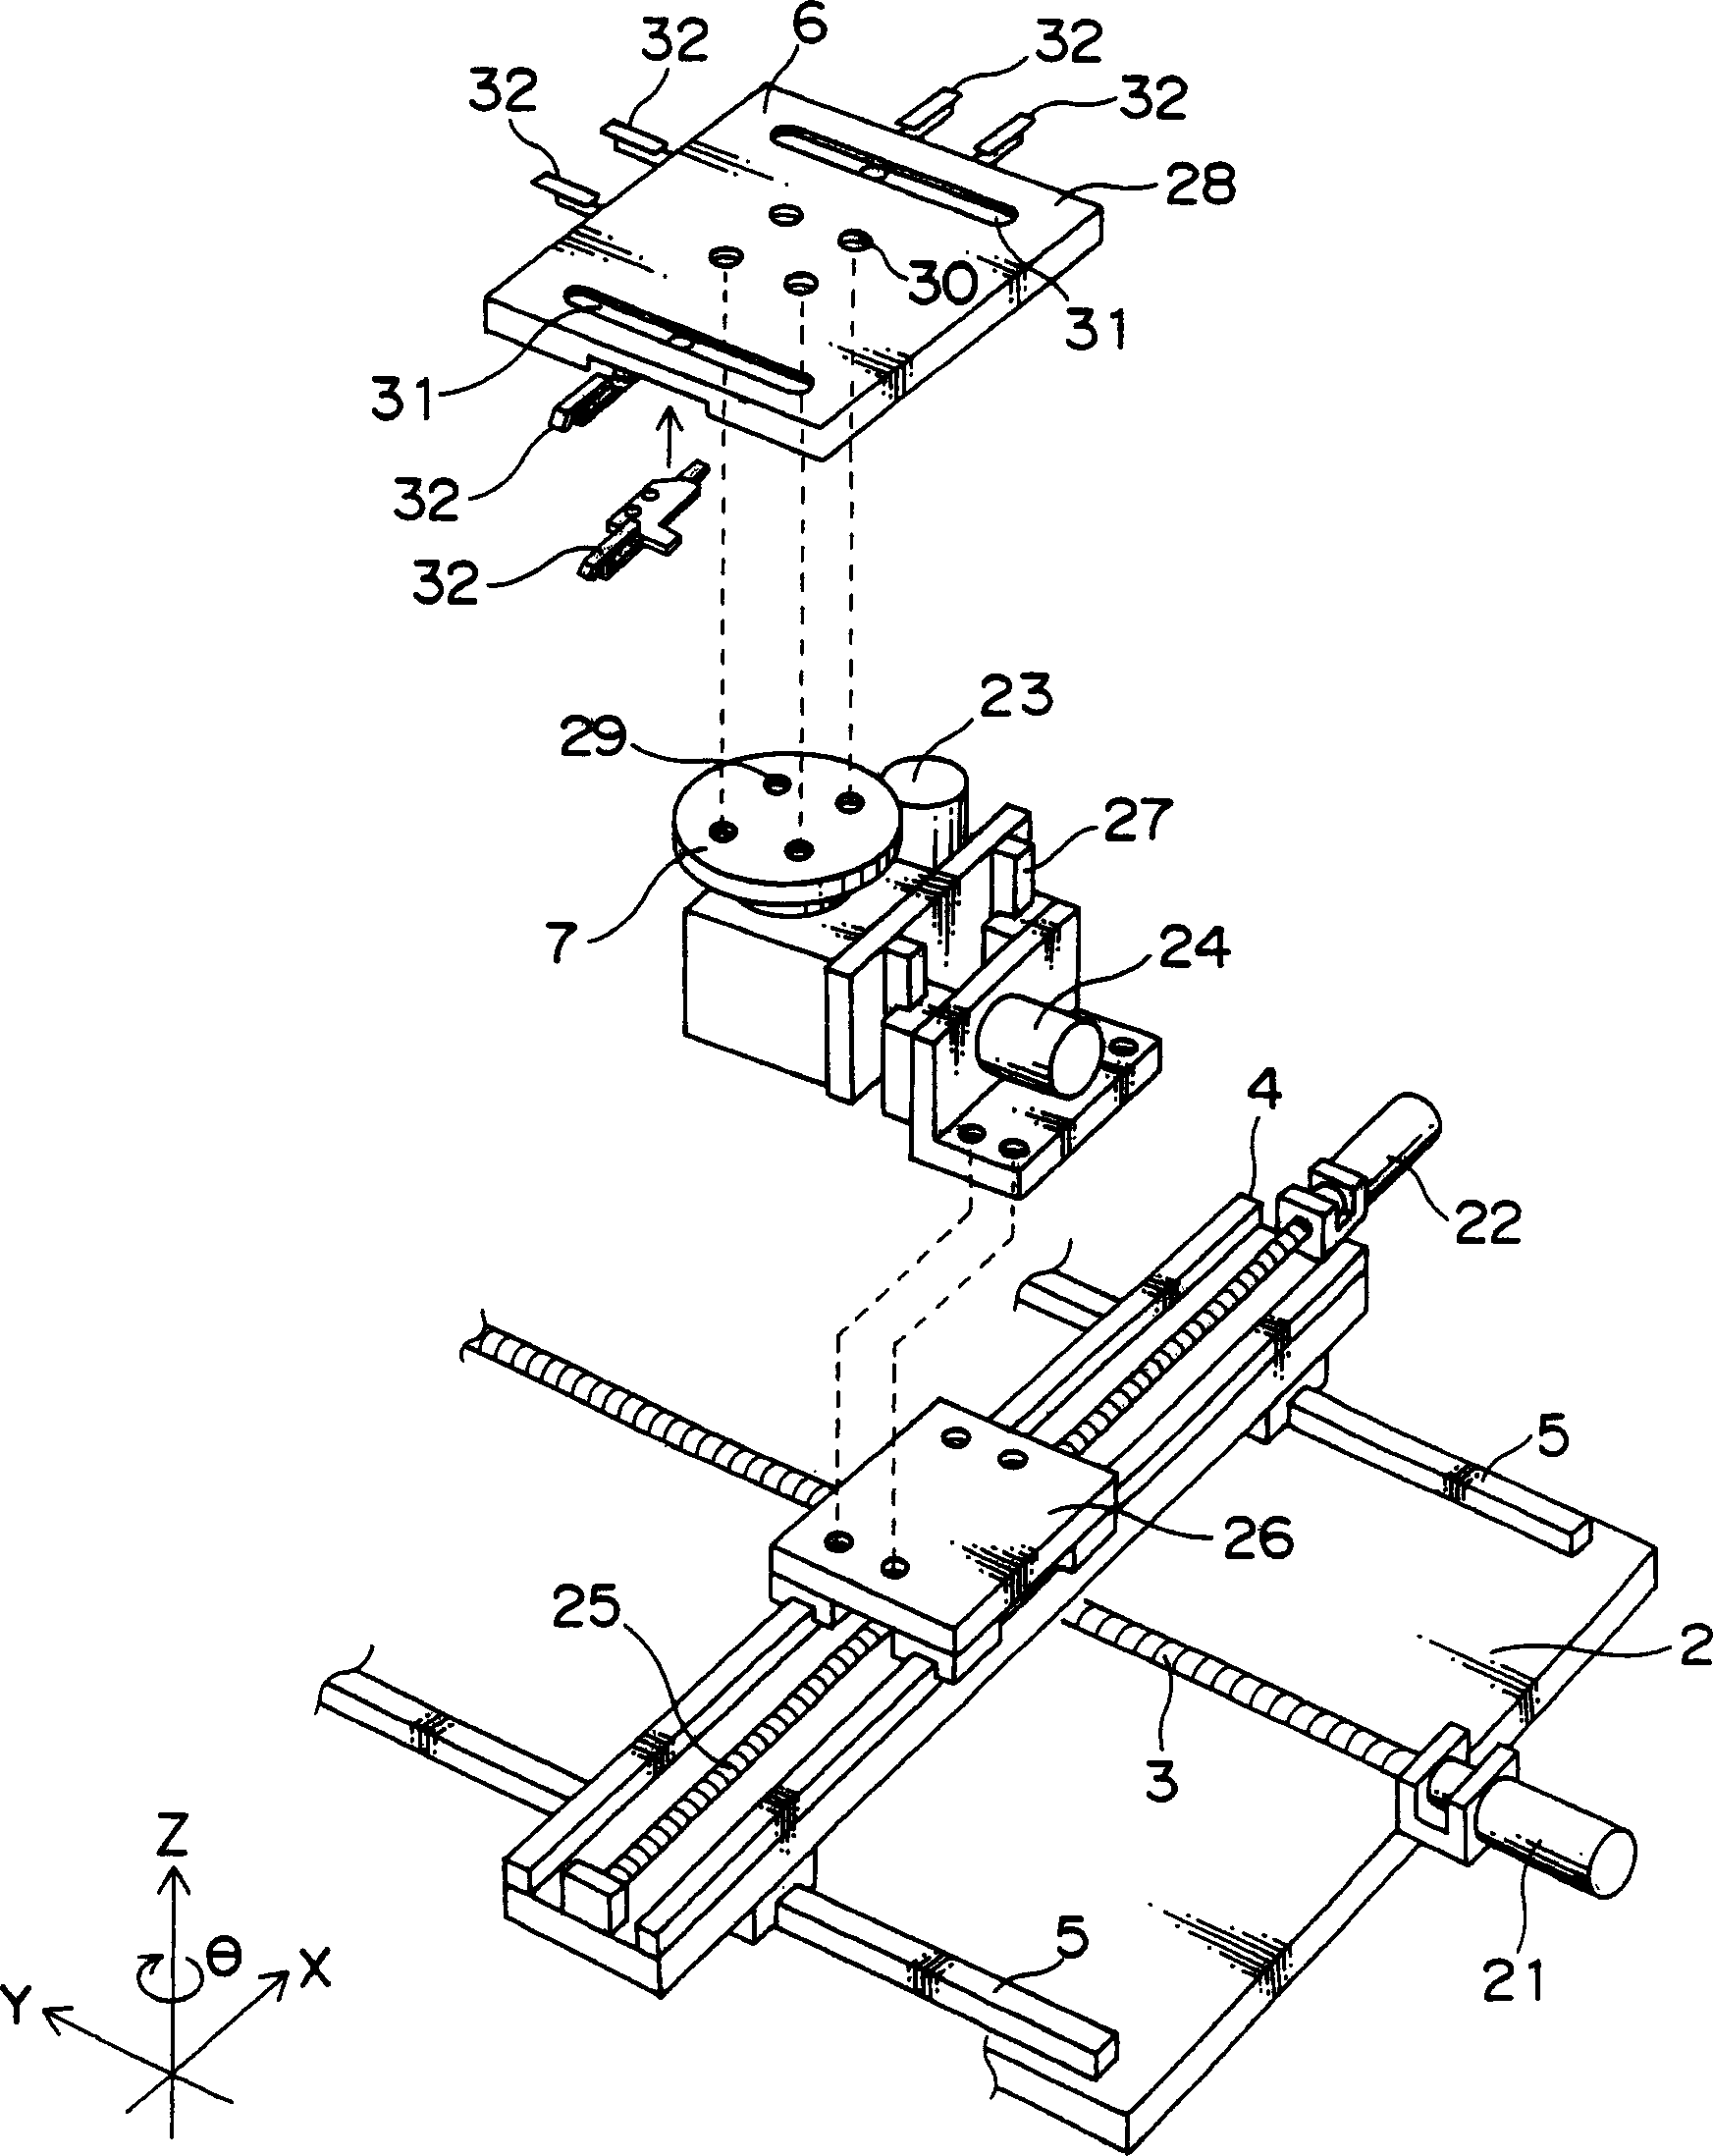 Panel assembling apparatus and panel assembling method